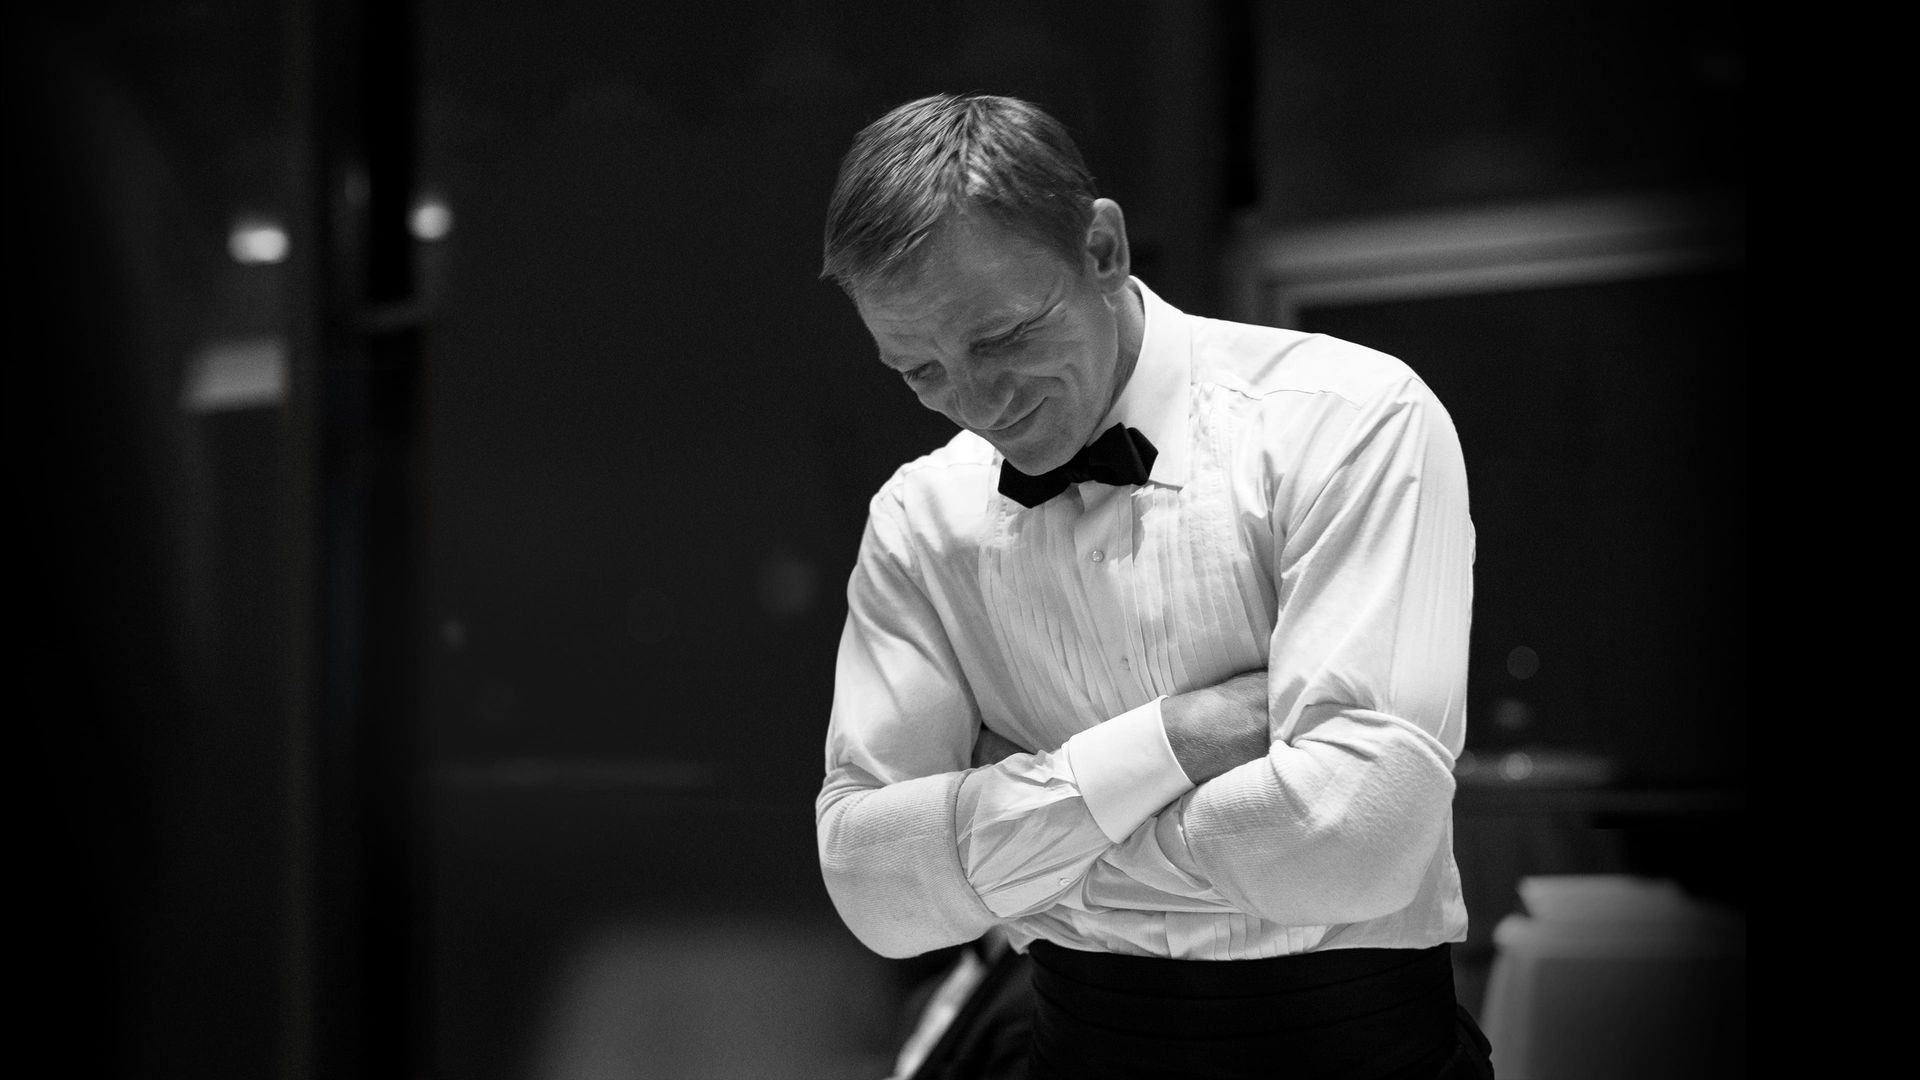 Being James Bond: The Daniel Craig Story background